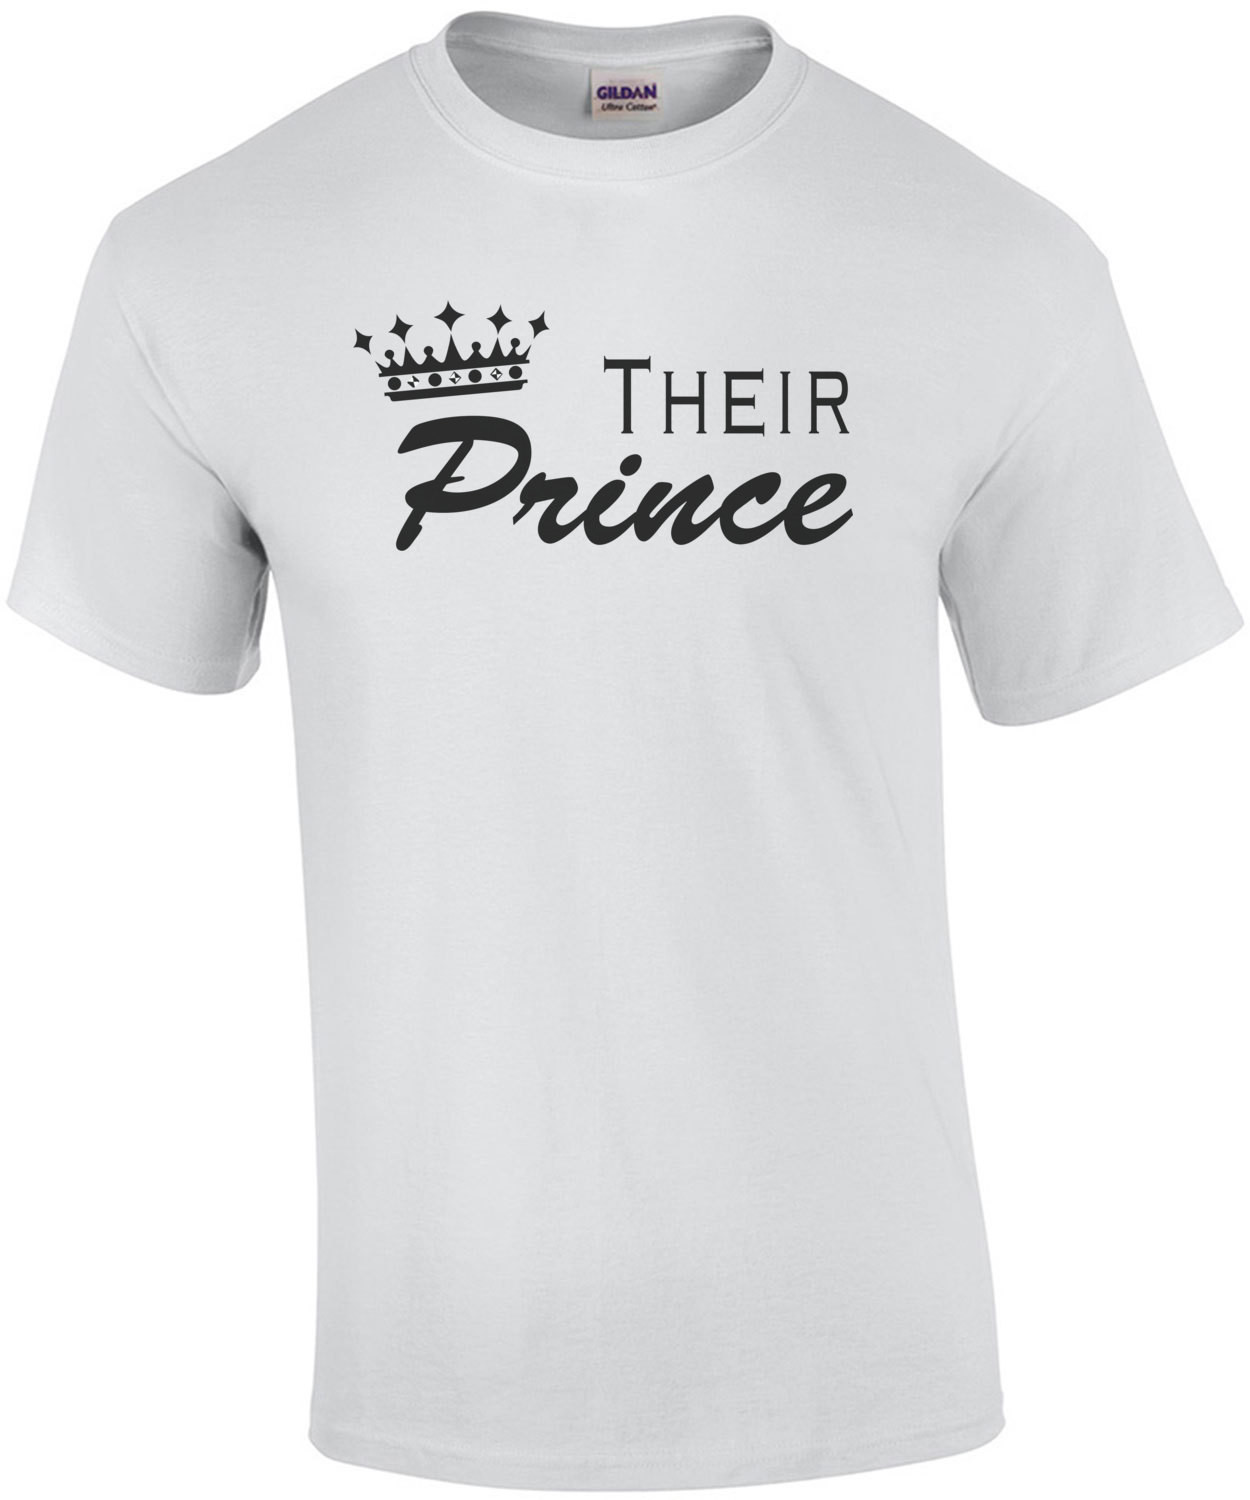 Their Prince T-Shirt